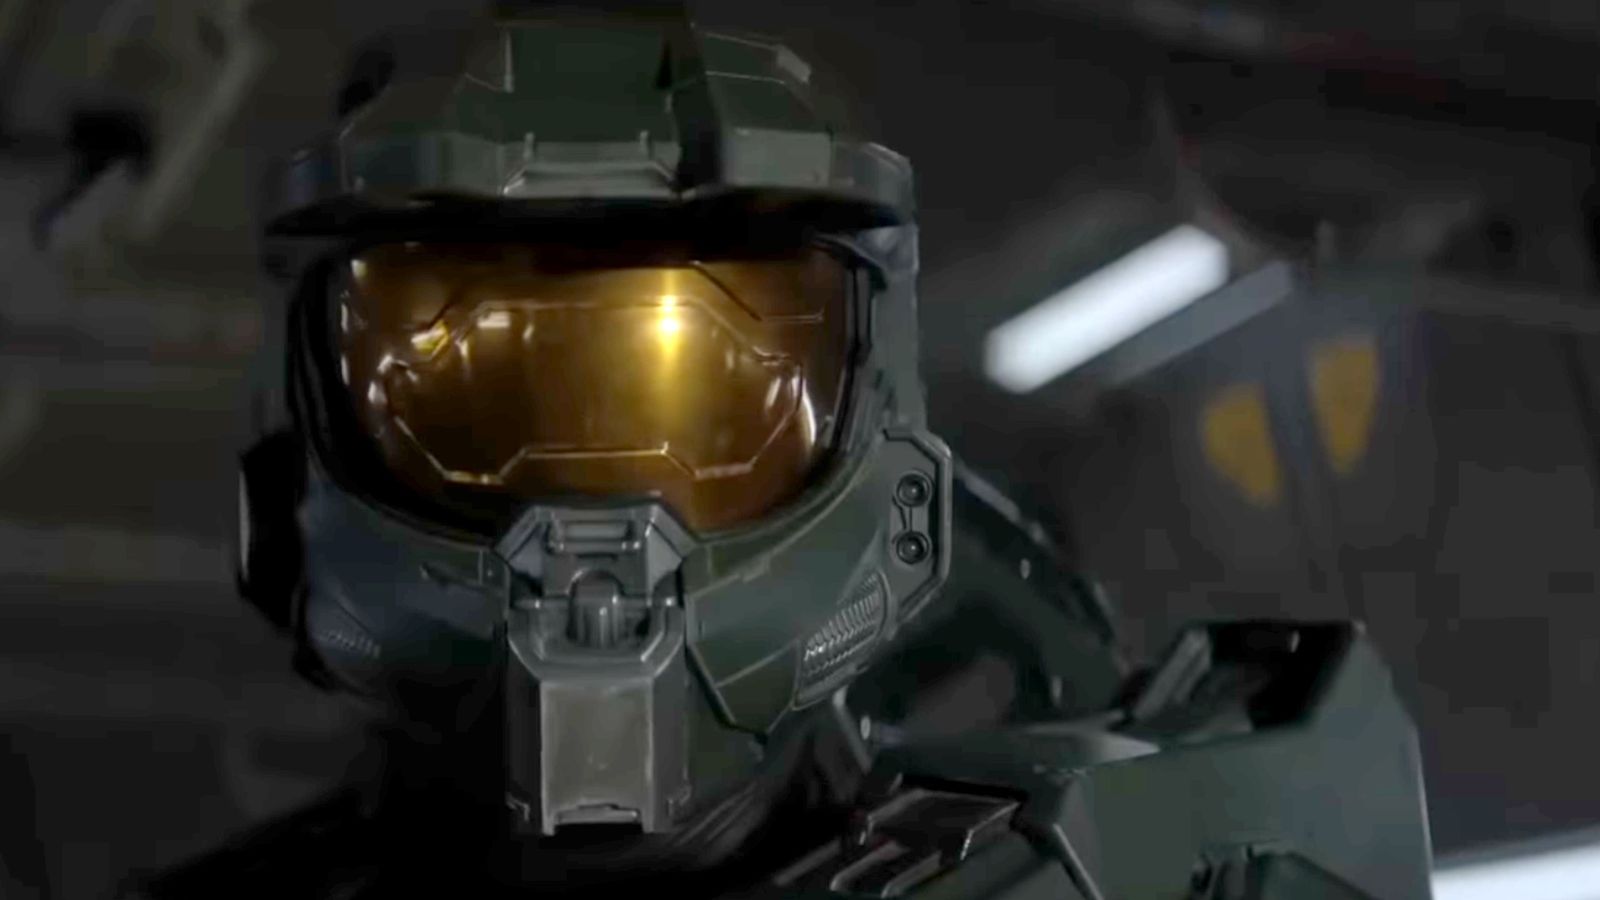 Halo Season 2 portrait shot of Master Chief in his Mjolnir power armor